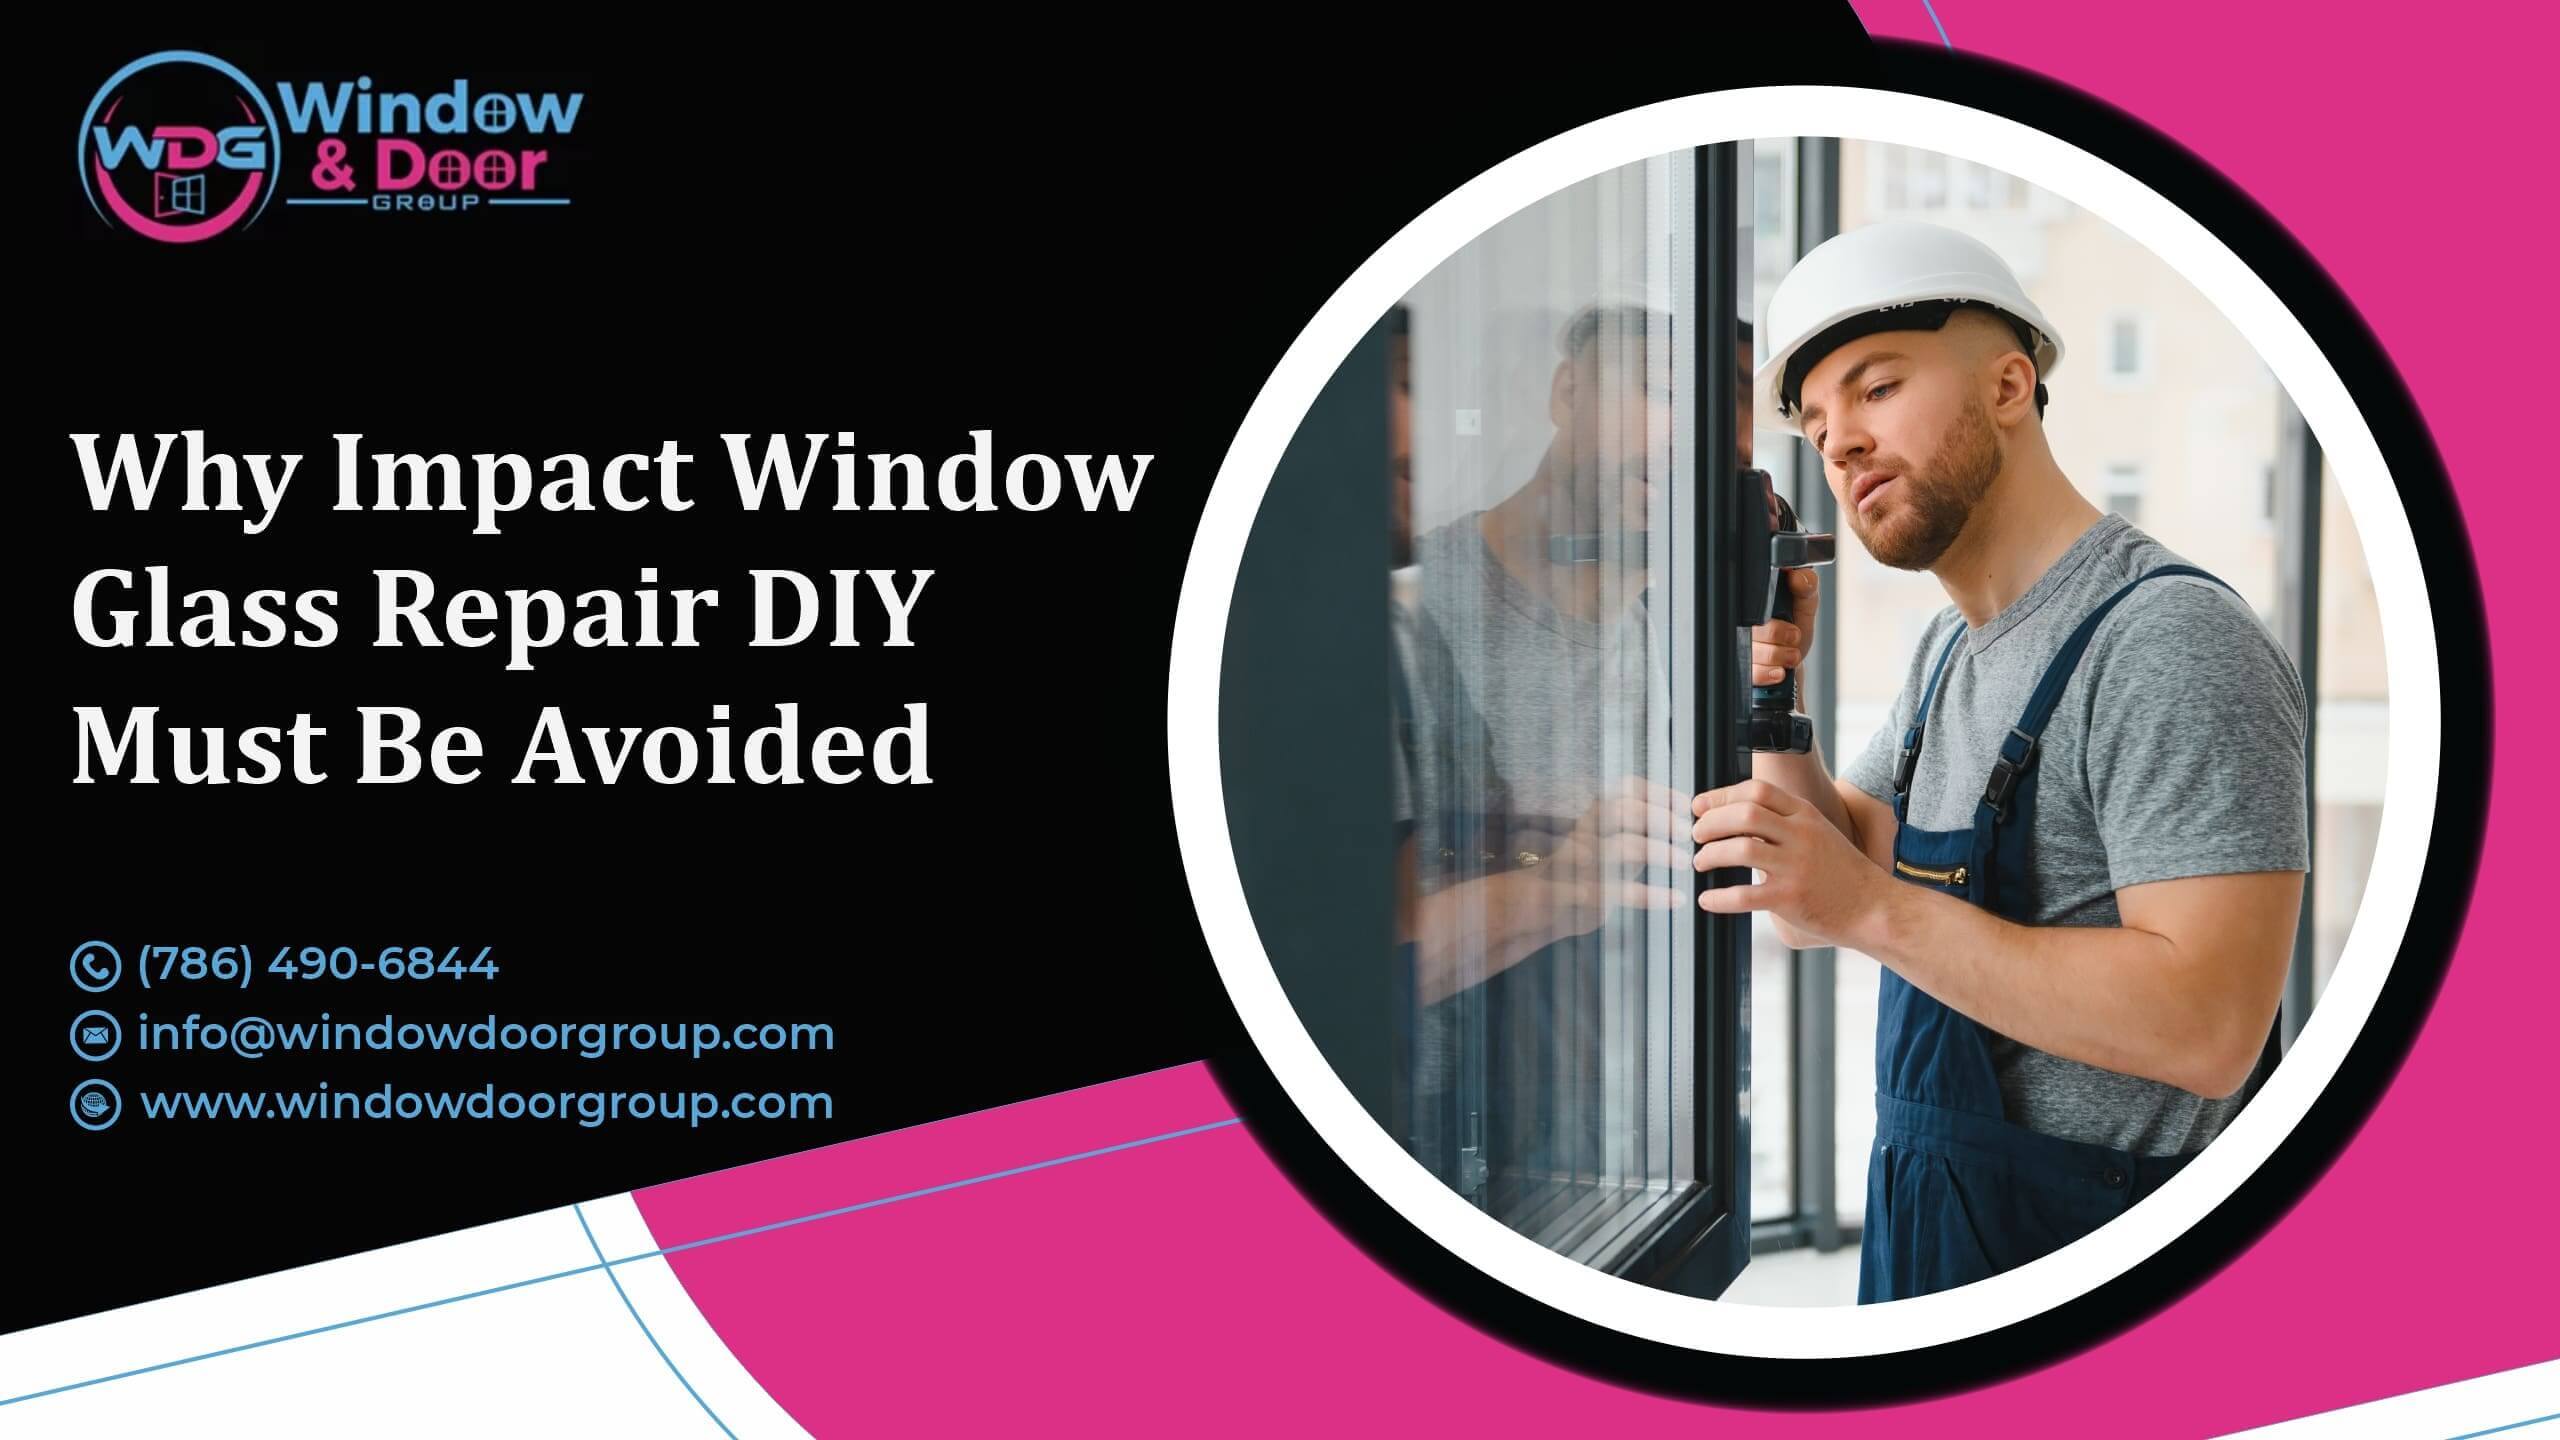 Why Impact Window Glass Repair DIY Must Be Avoided